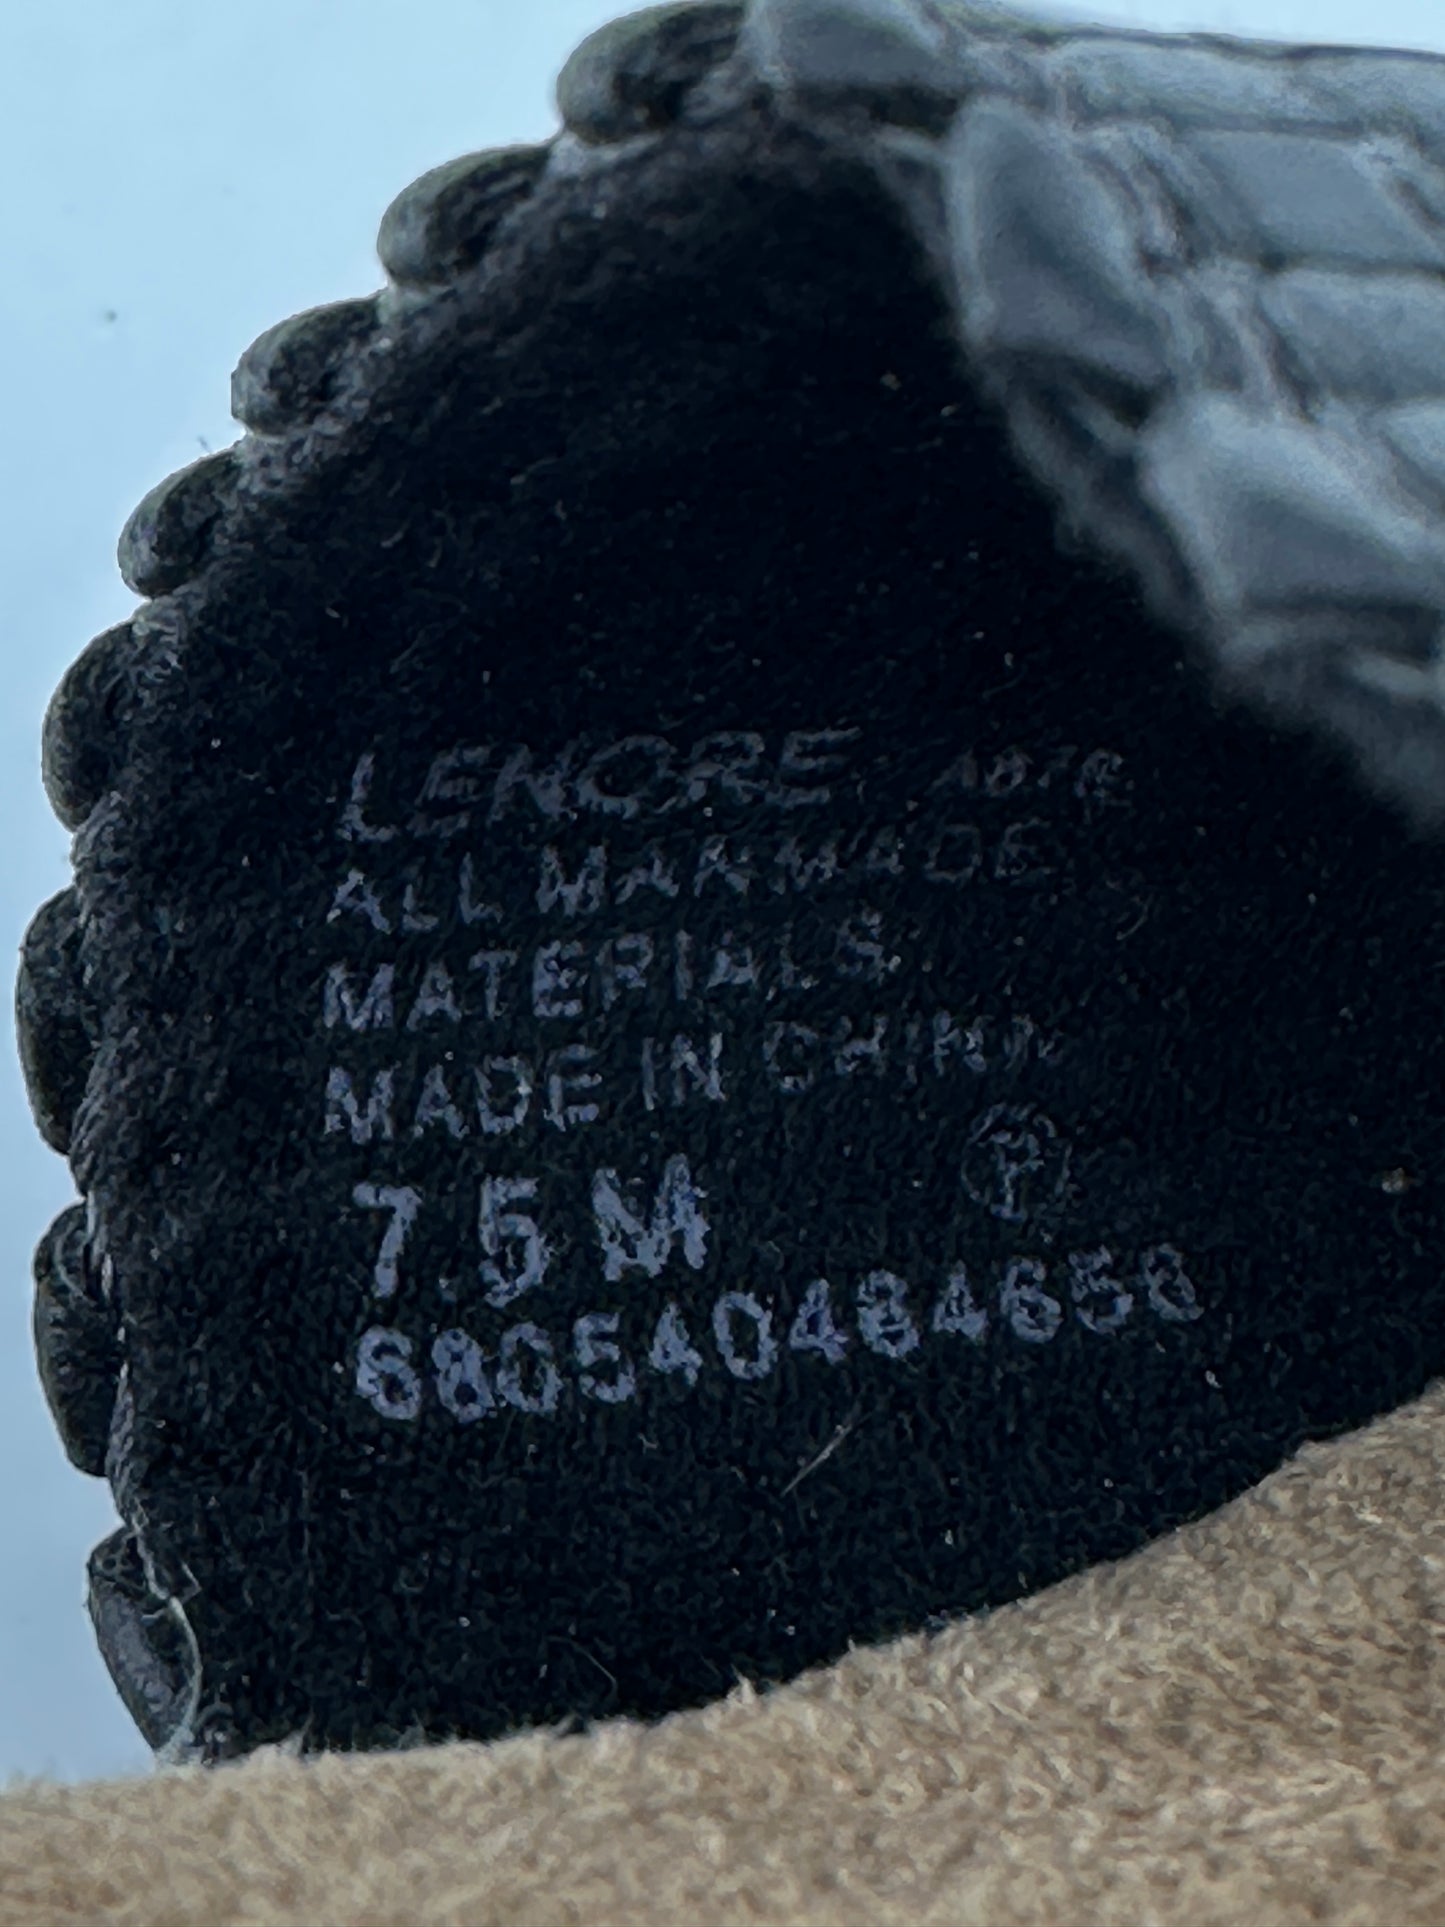 Mudd Size 7.5 M Black "Lenore" Slip-On Platform Wedge Sandals